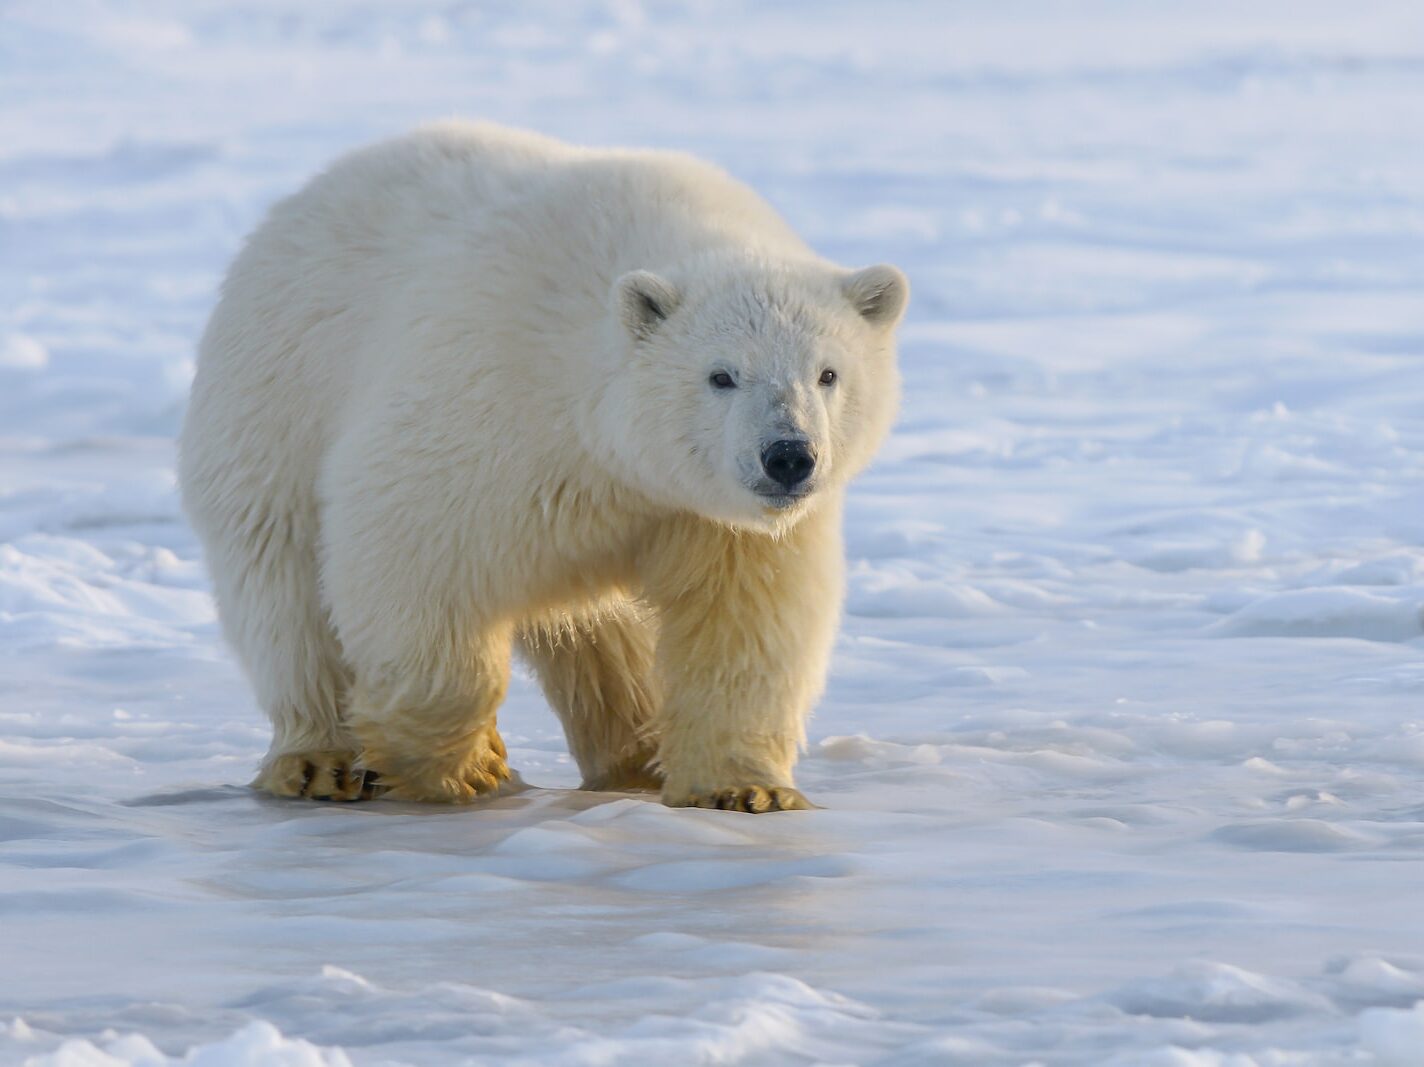 polar bear on snow covered ground during daytime